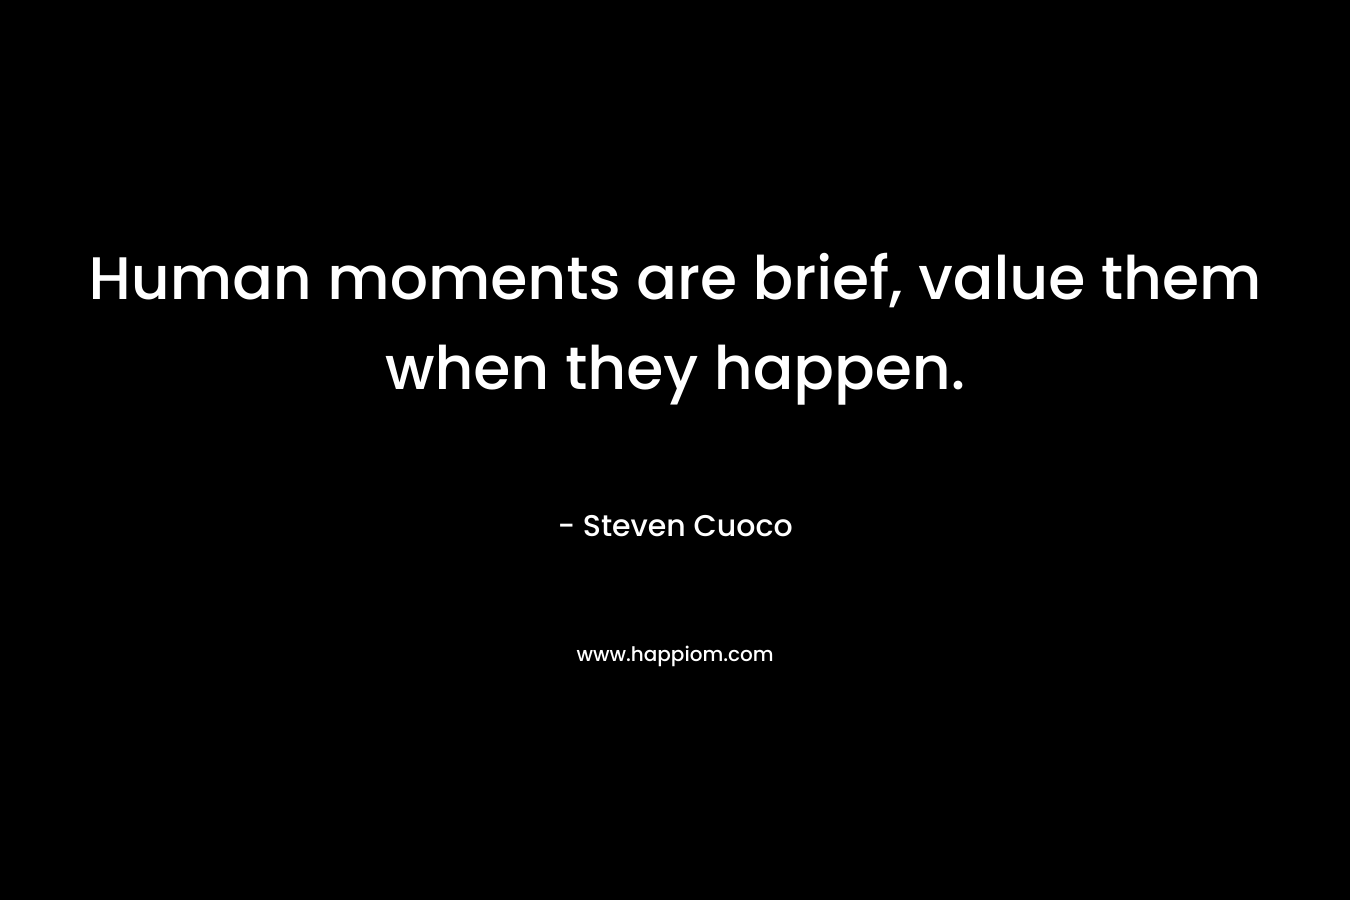 Human moments are brief, value them when they happen. – Steven Cuoco